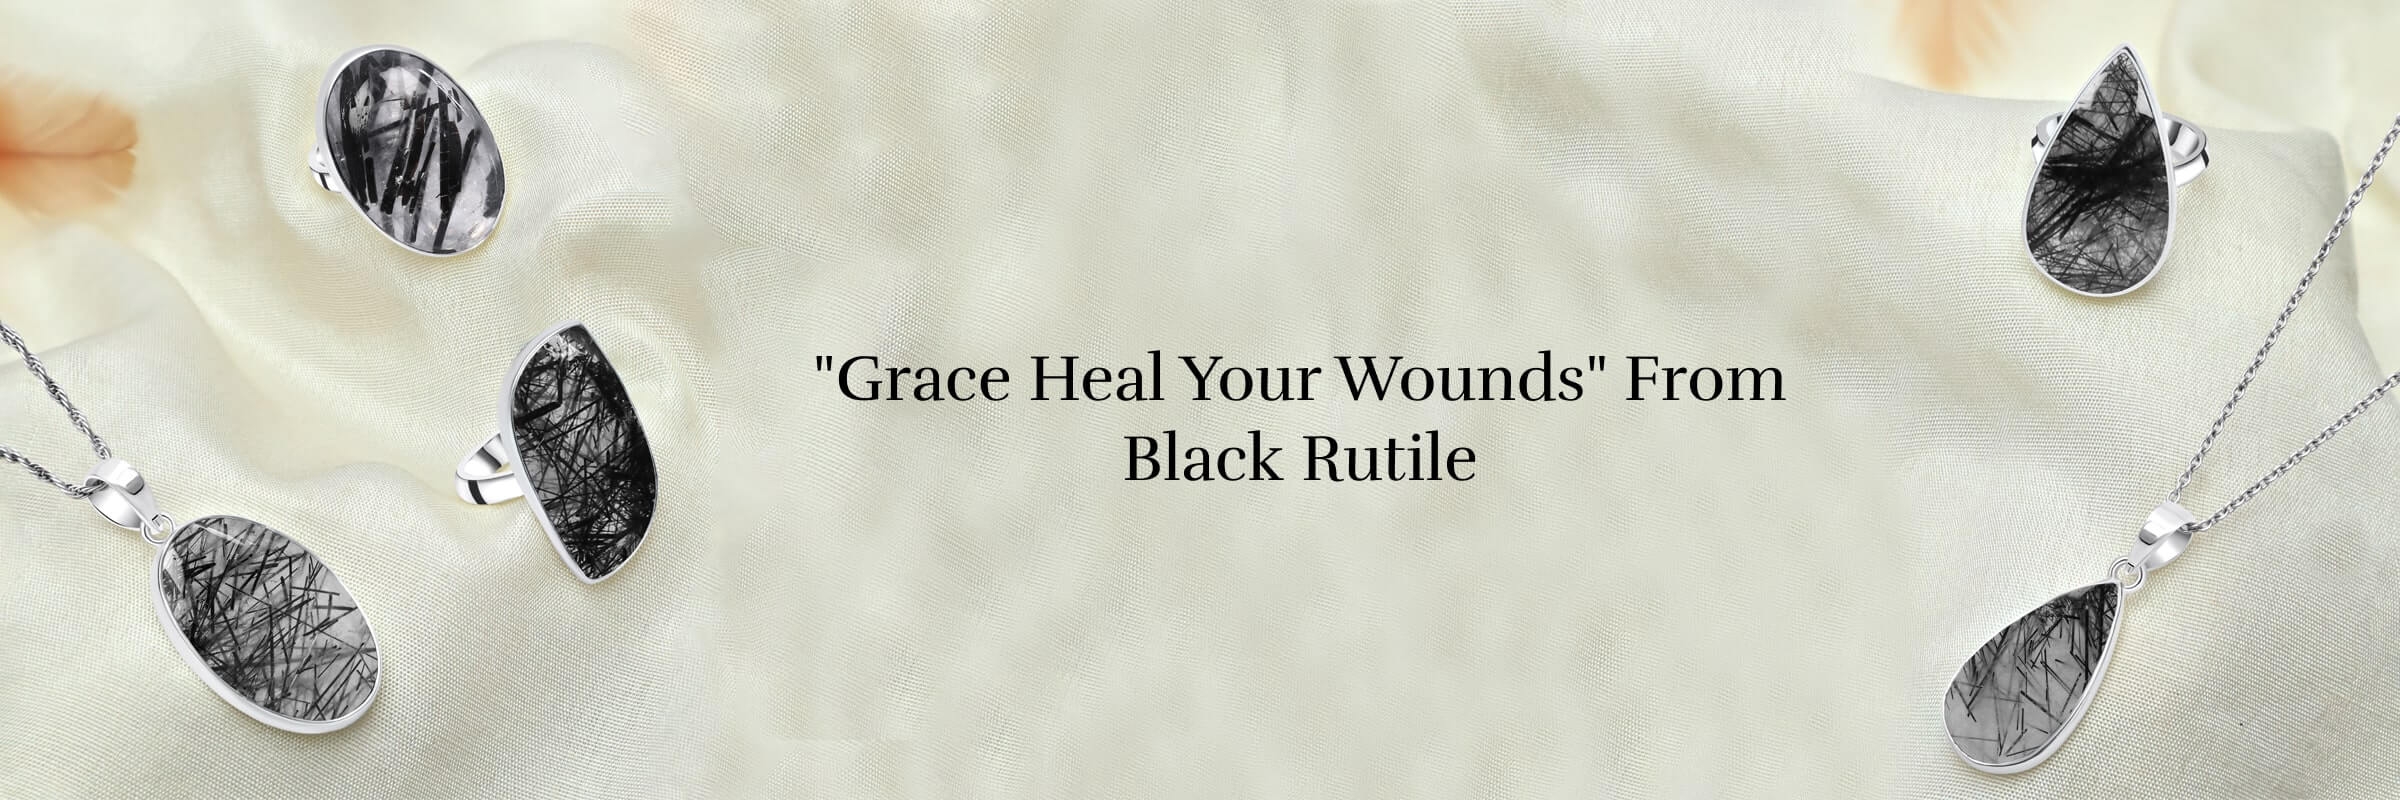 Physical healing benefits of black rutile